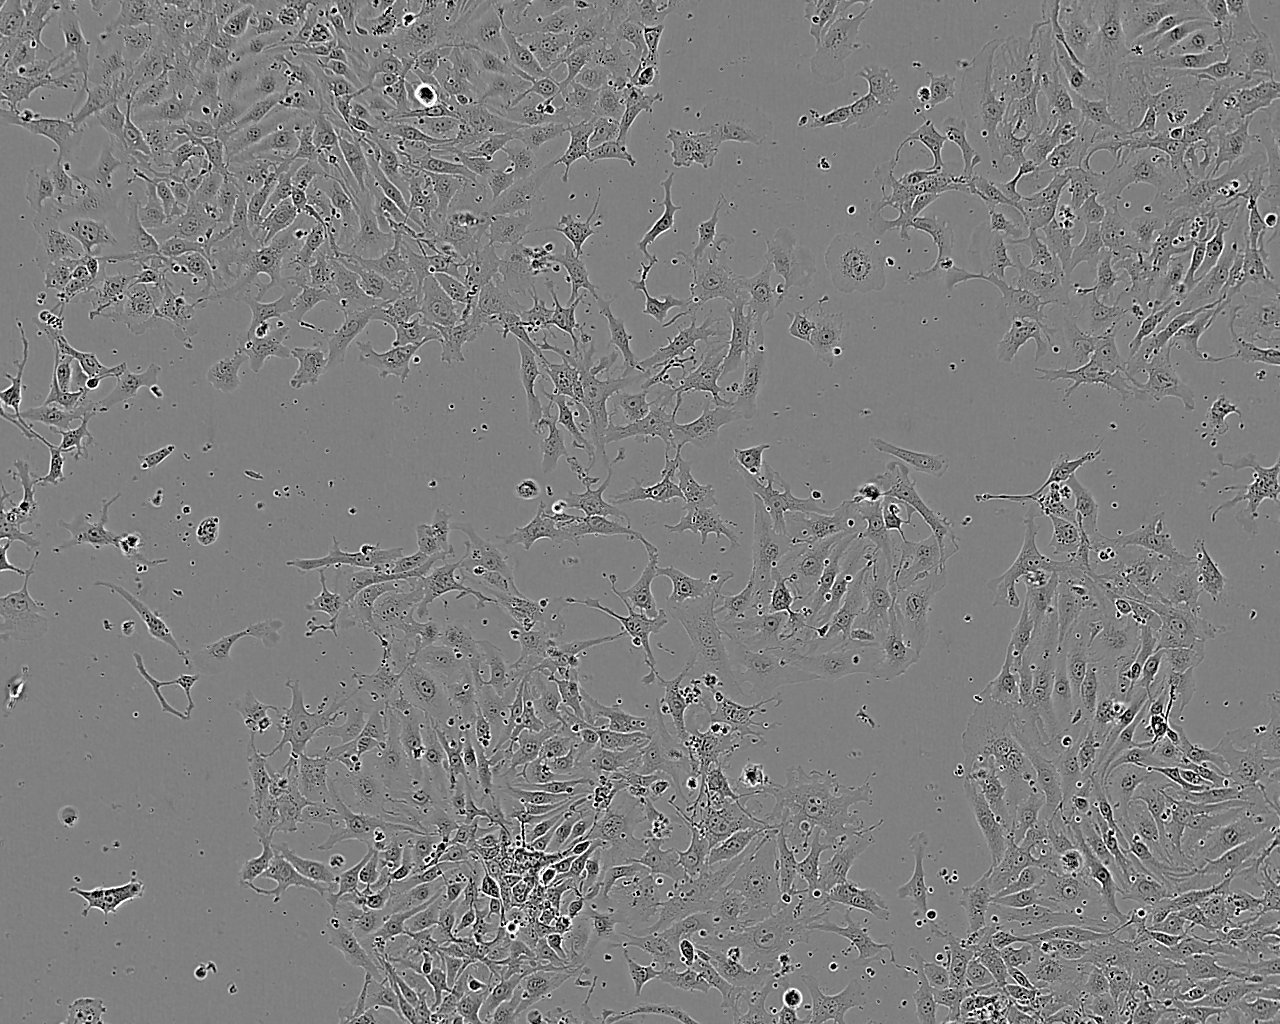 NCI-H157 epithelioid cells人非小细胞肺腺癌细胞系